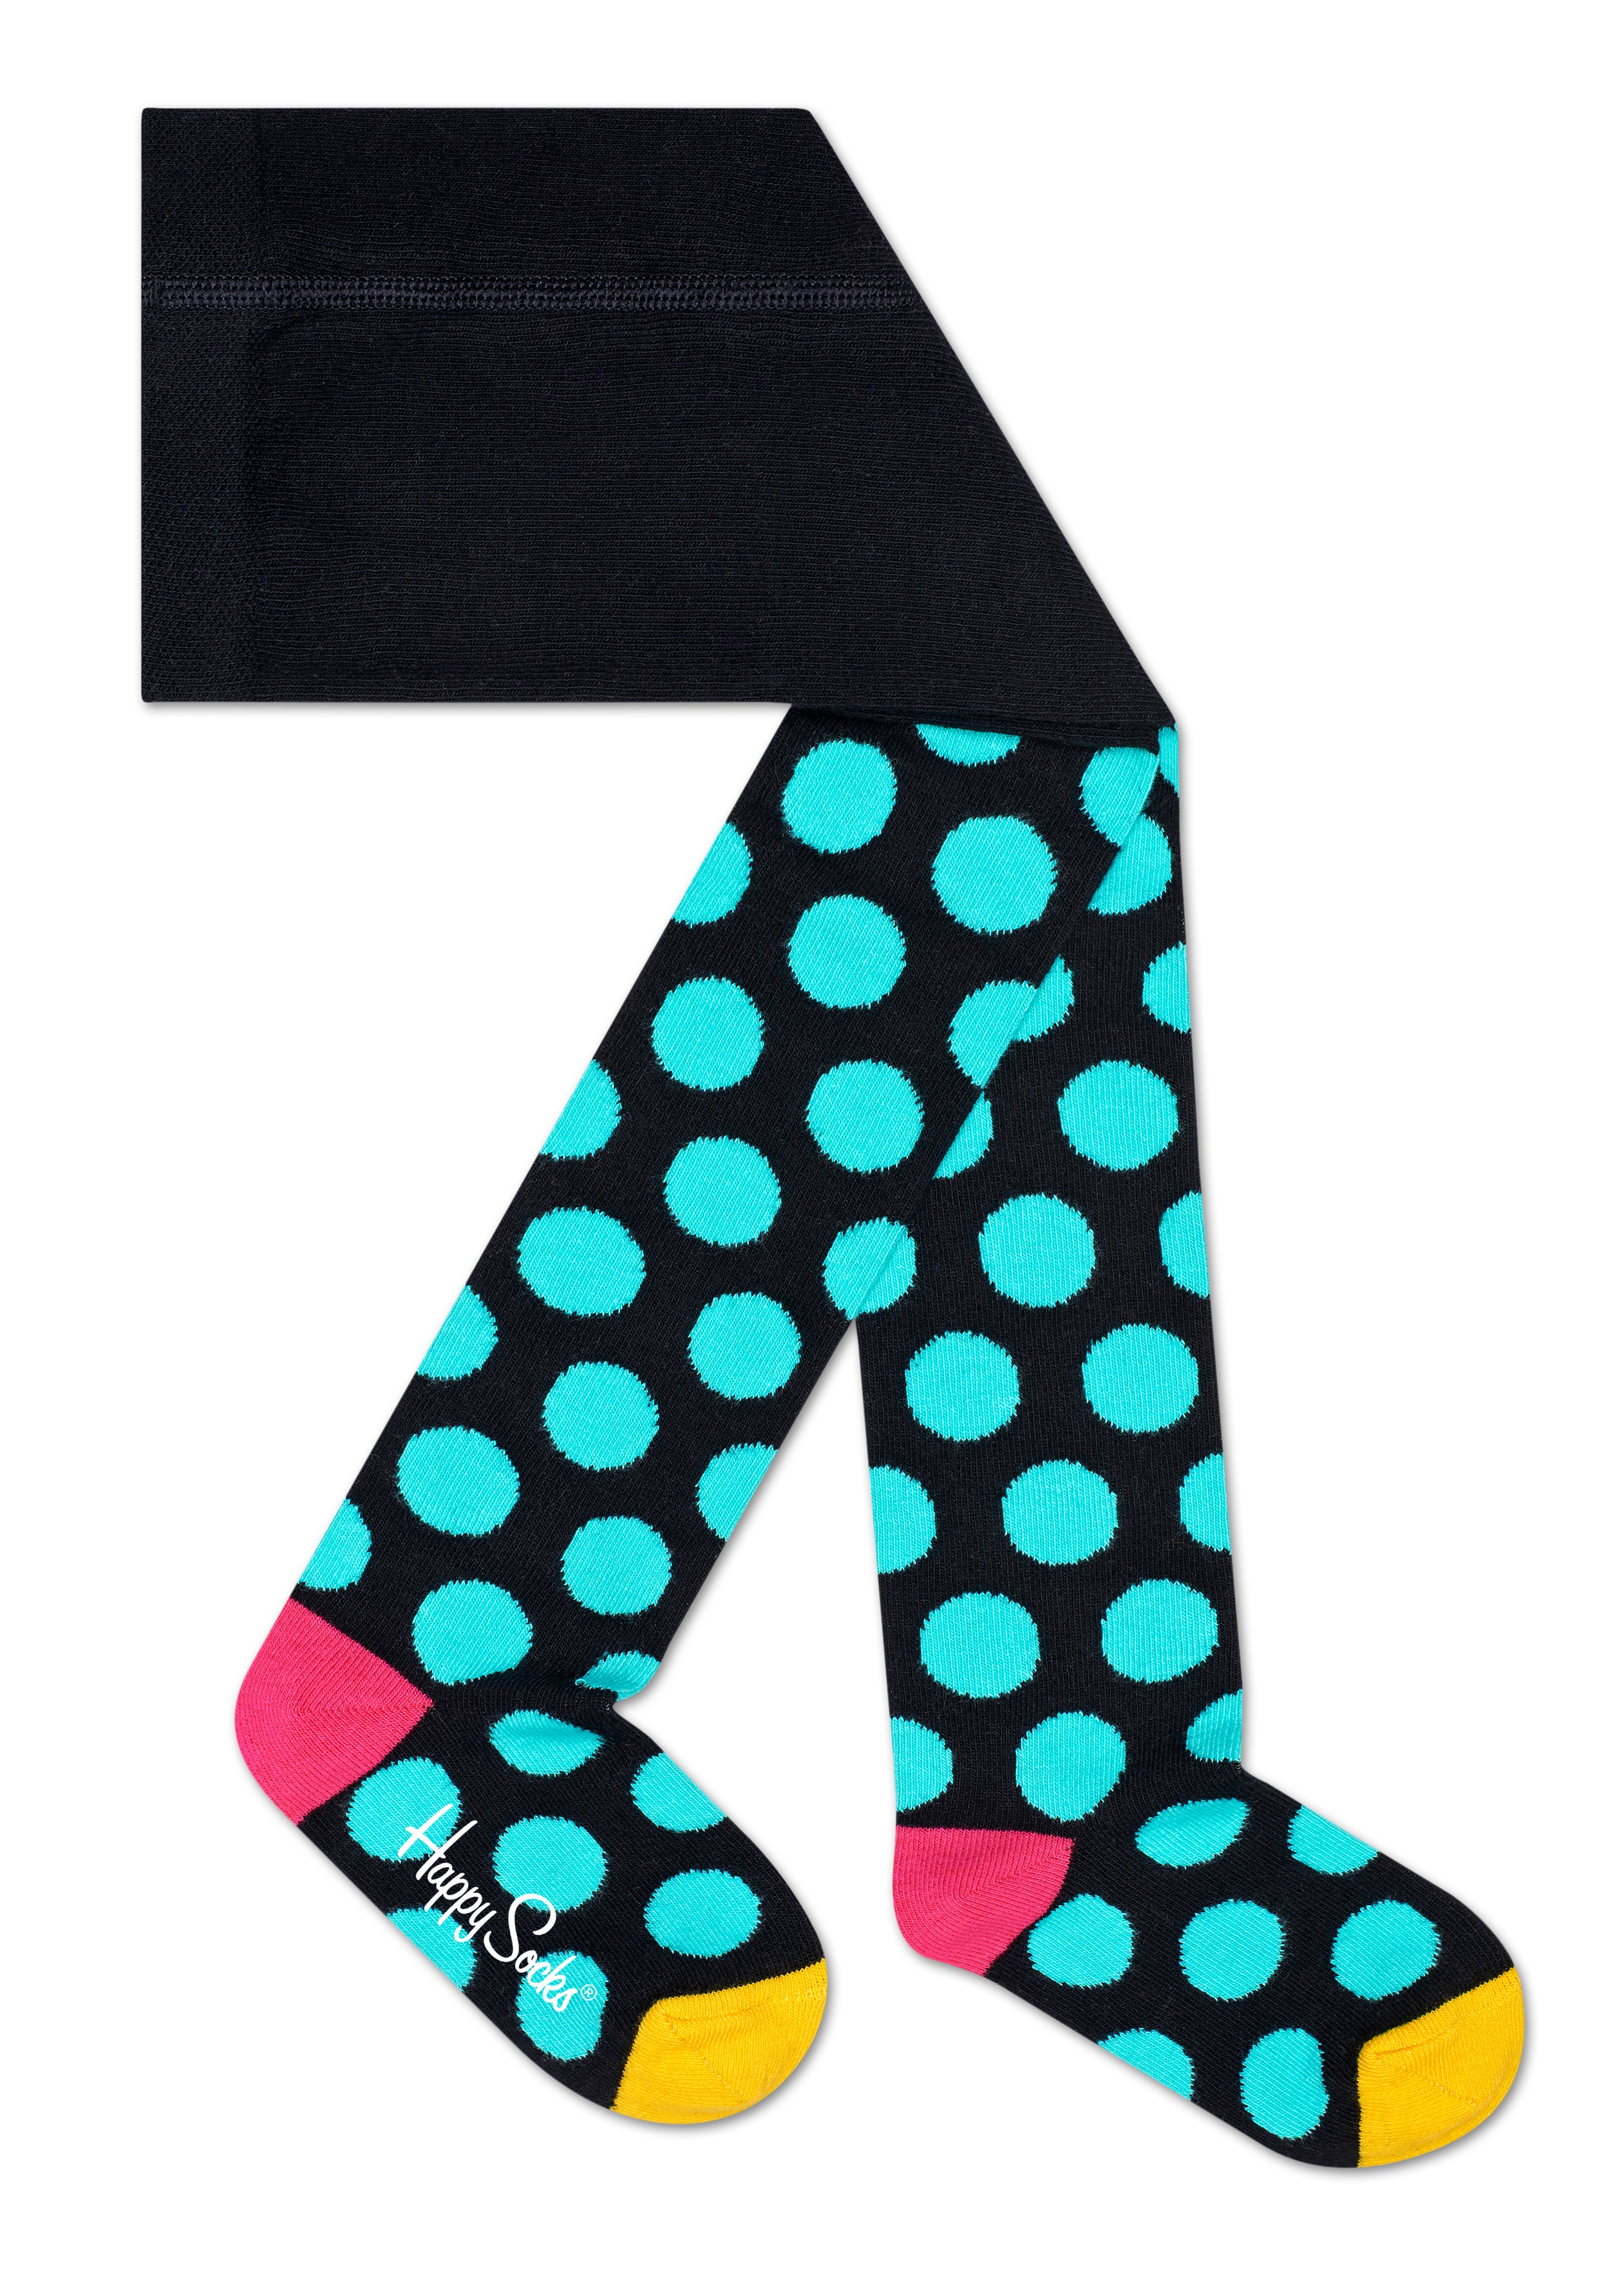 Dětské barevné punčochy Happy Socks, vzor Big Dot